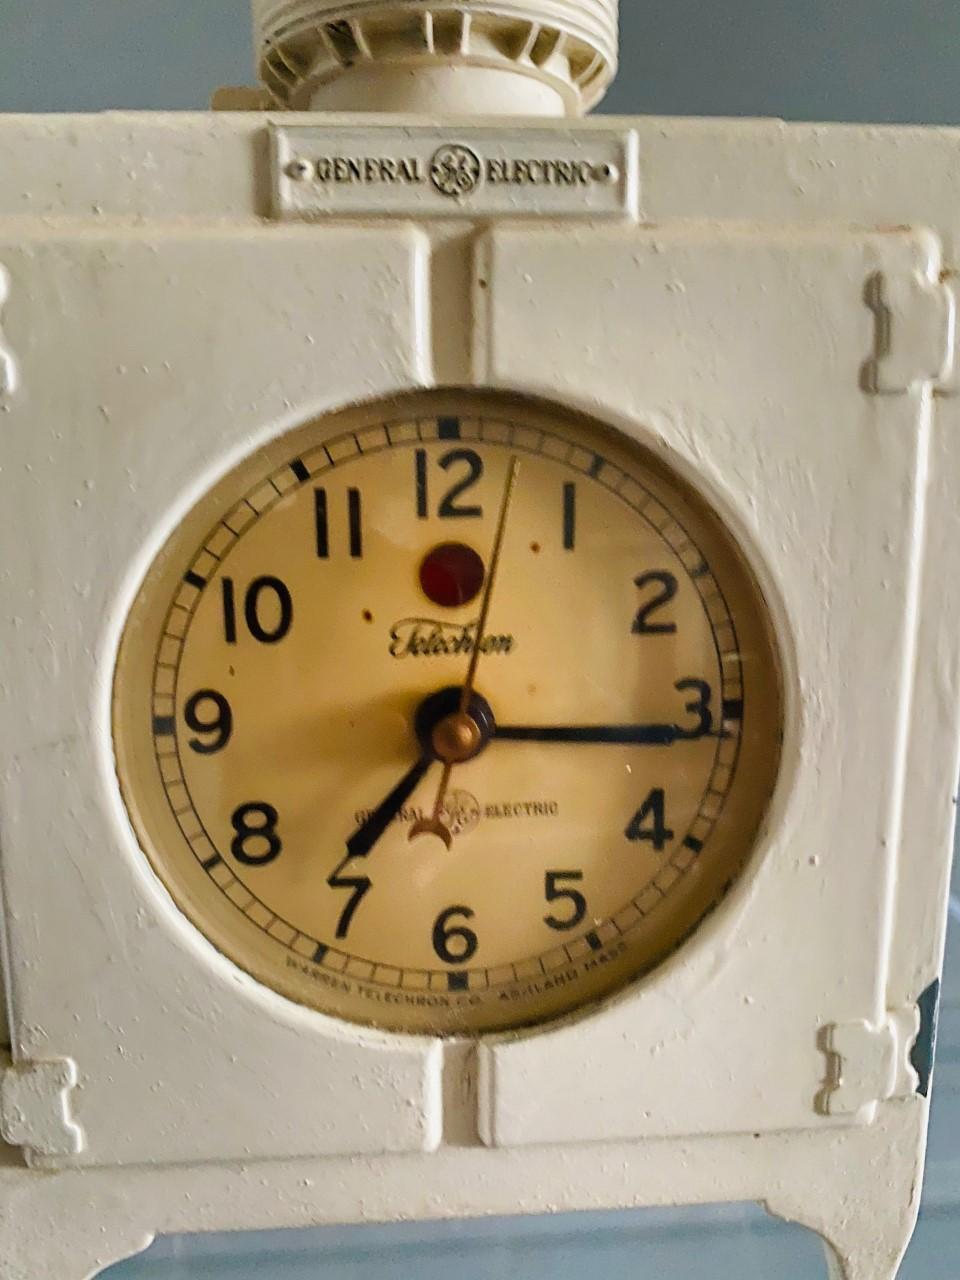 Art Nouveau Vintage General Electric Refrigerator Clock